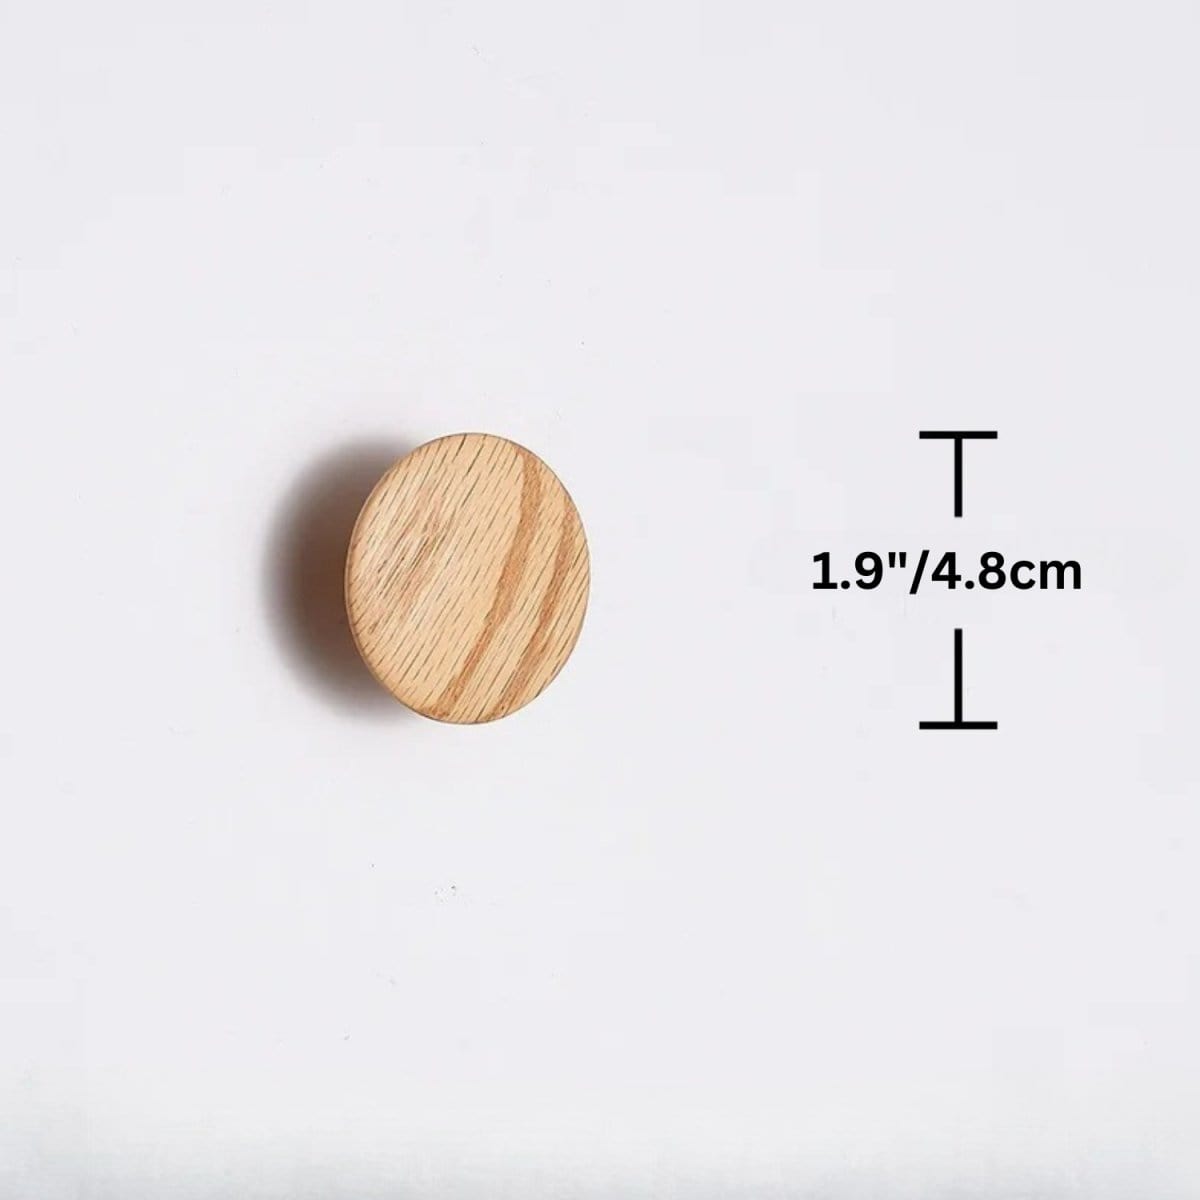 Residence Supply Knob: 1.9" / 4.8cm Drevo Drawer Pull